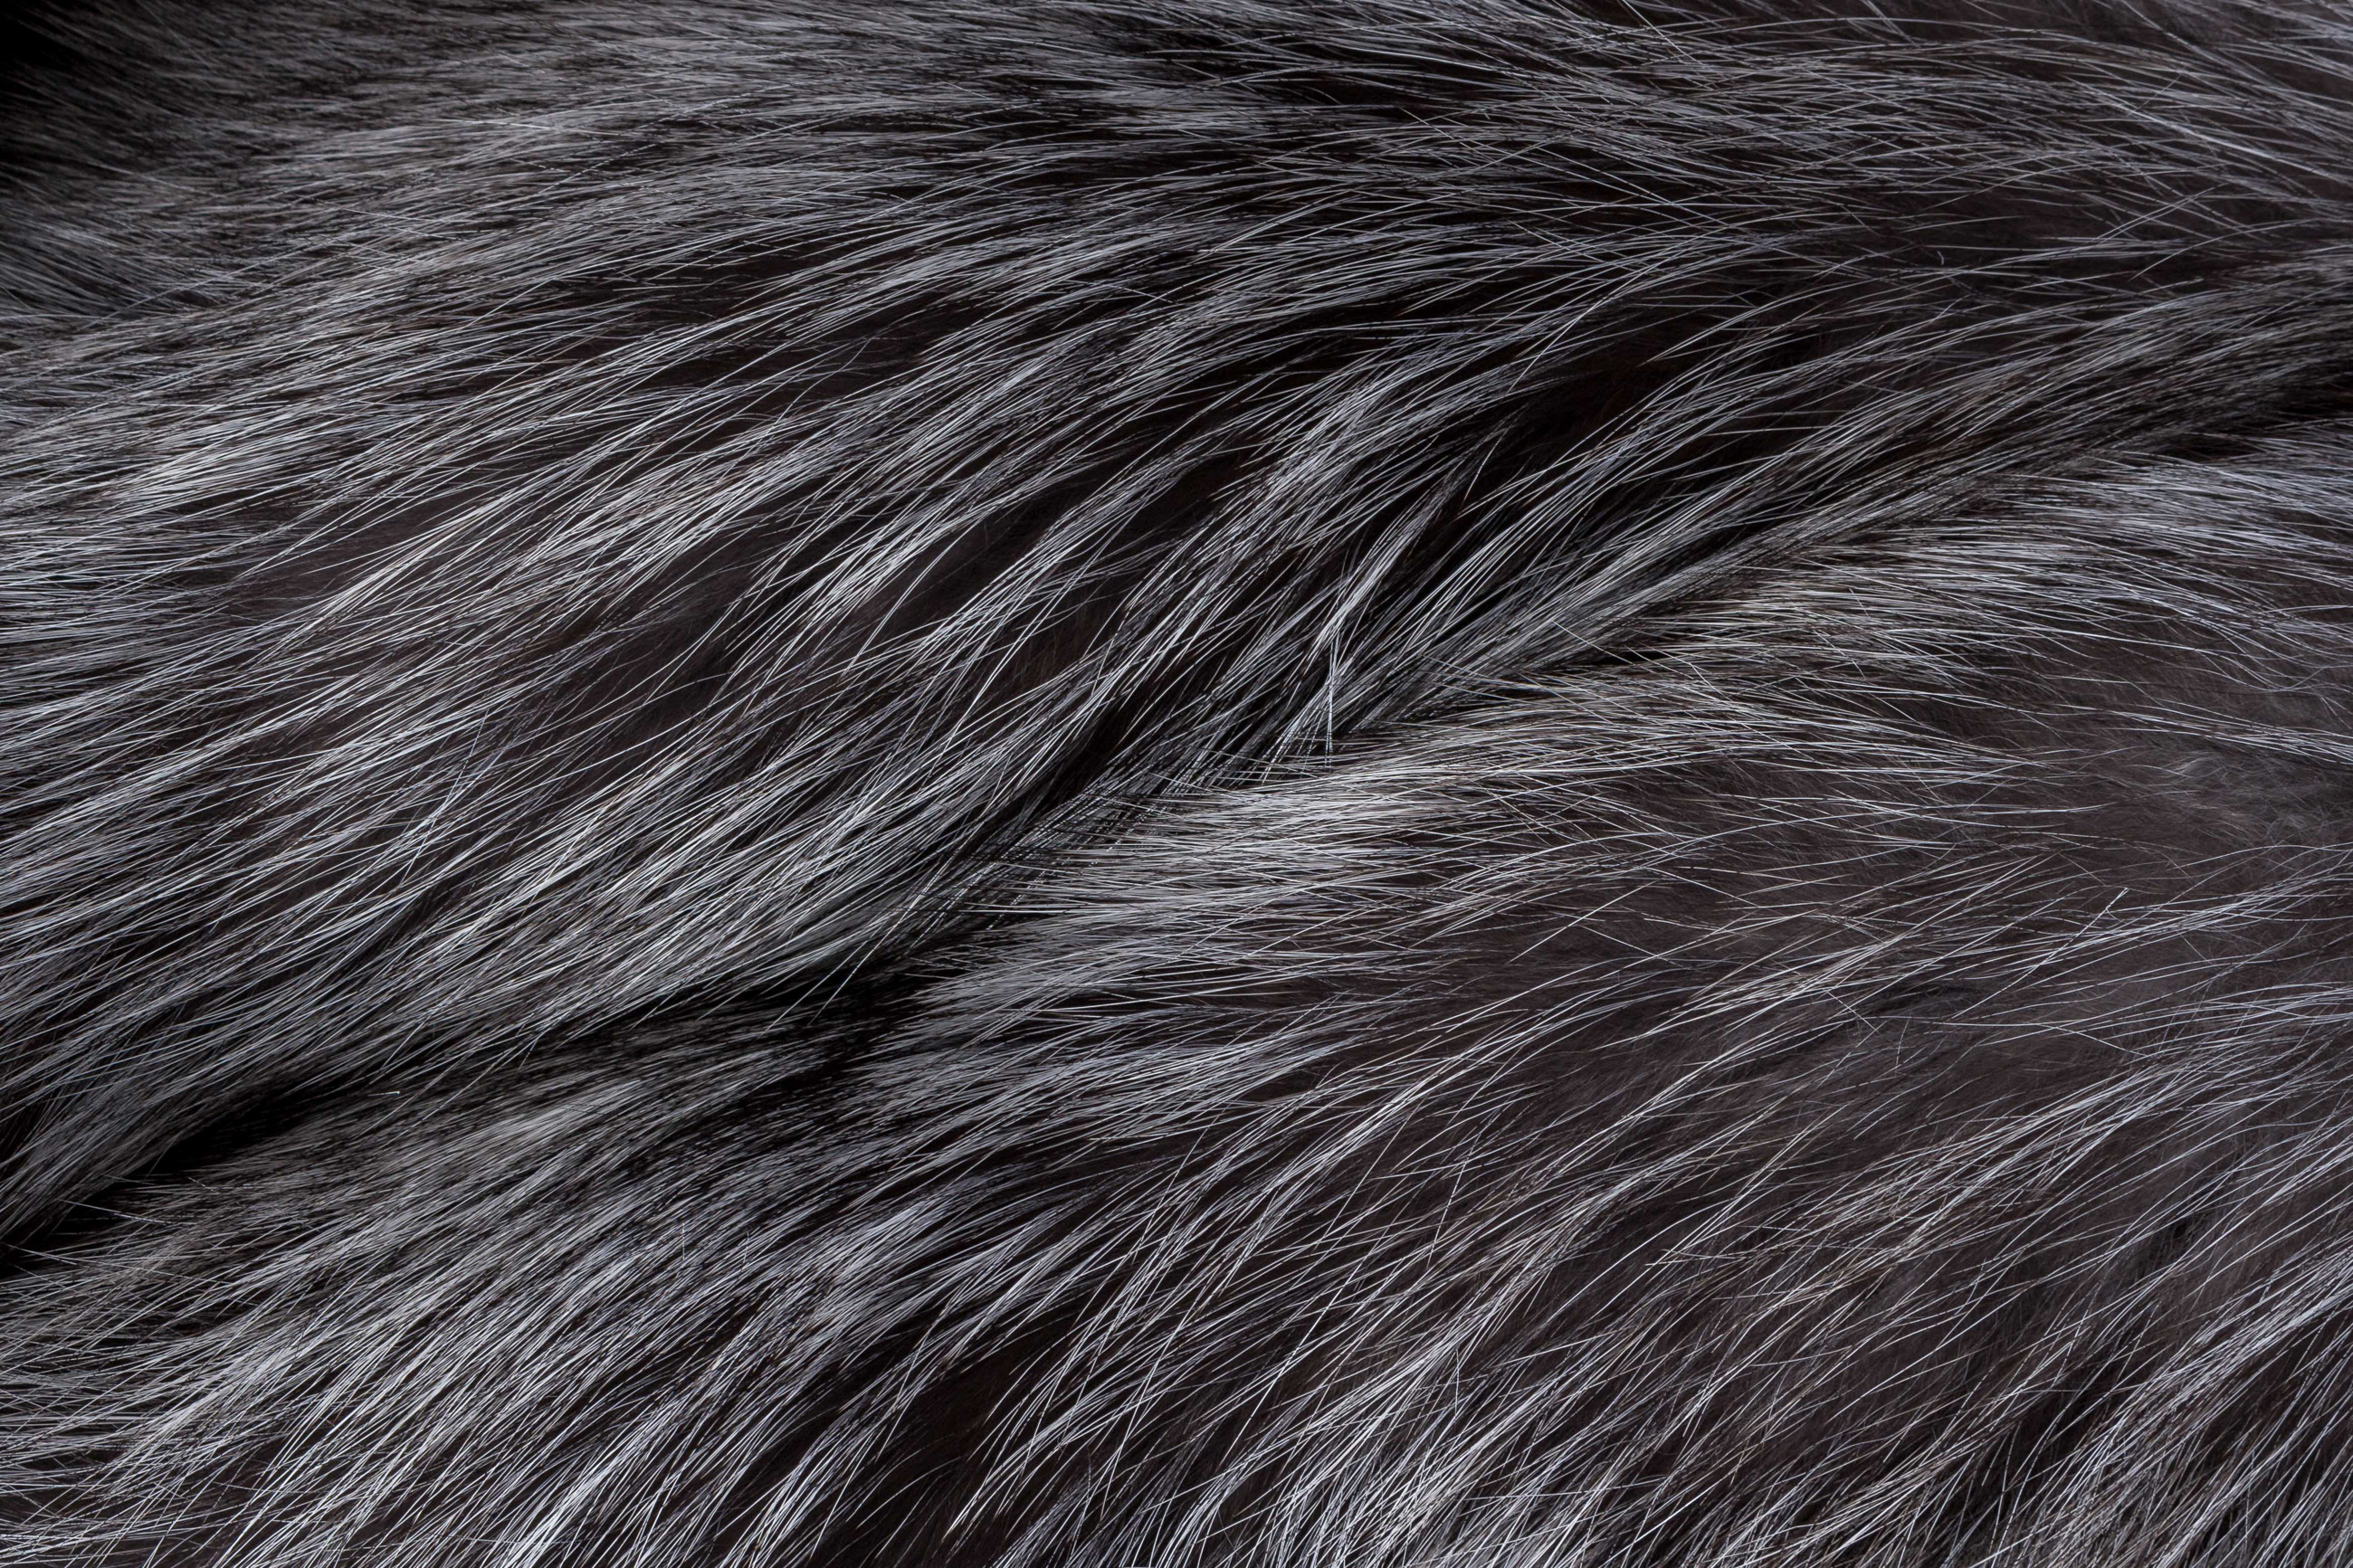 SAGA Silver Fox Fur Blanket - natural